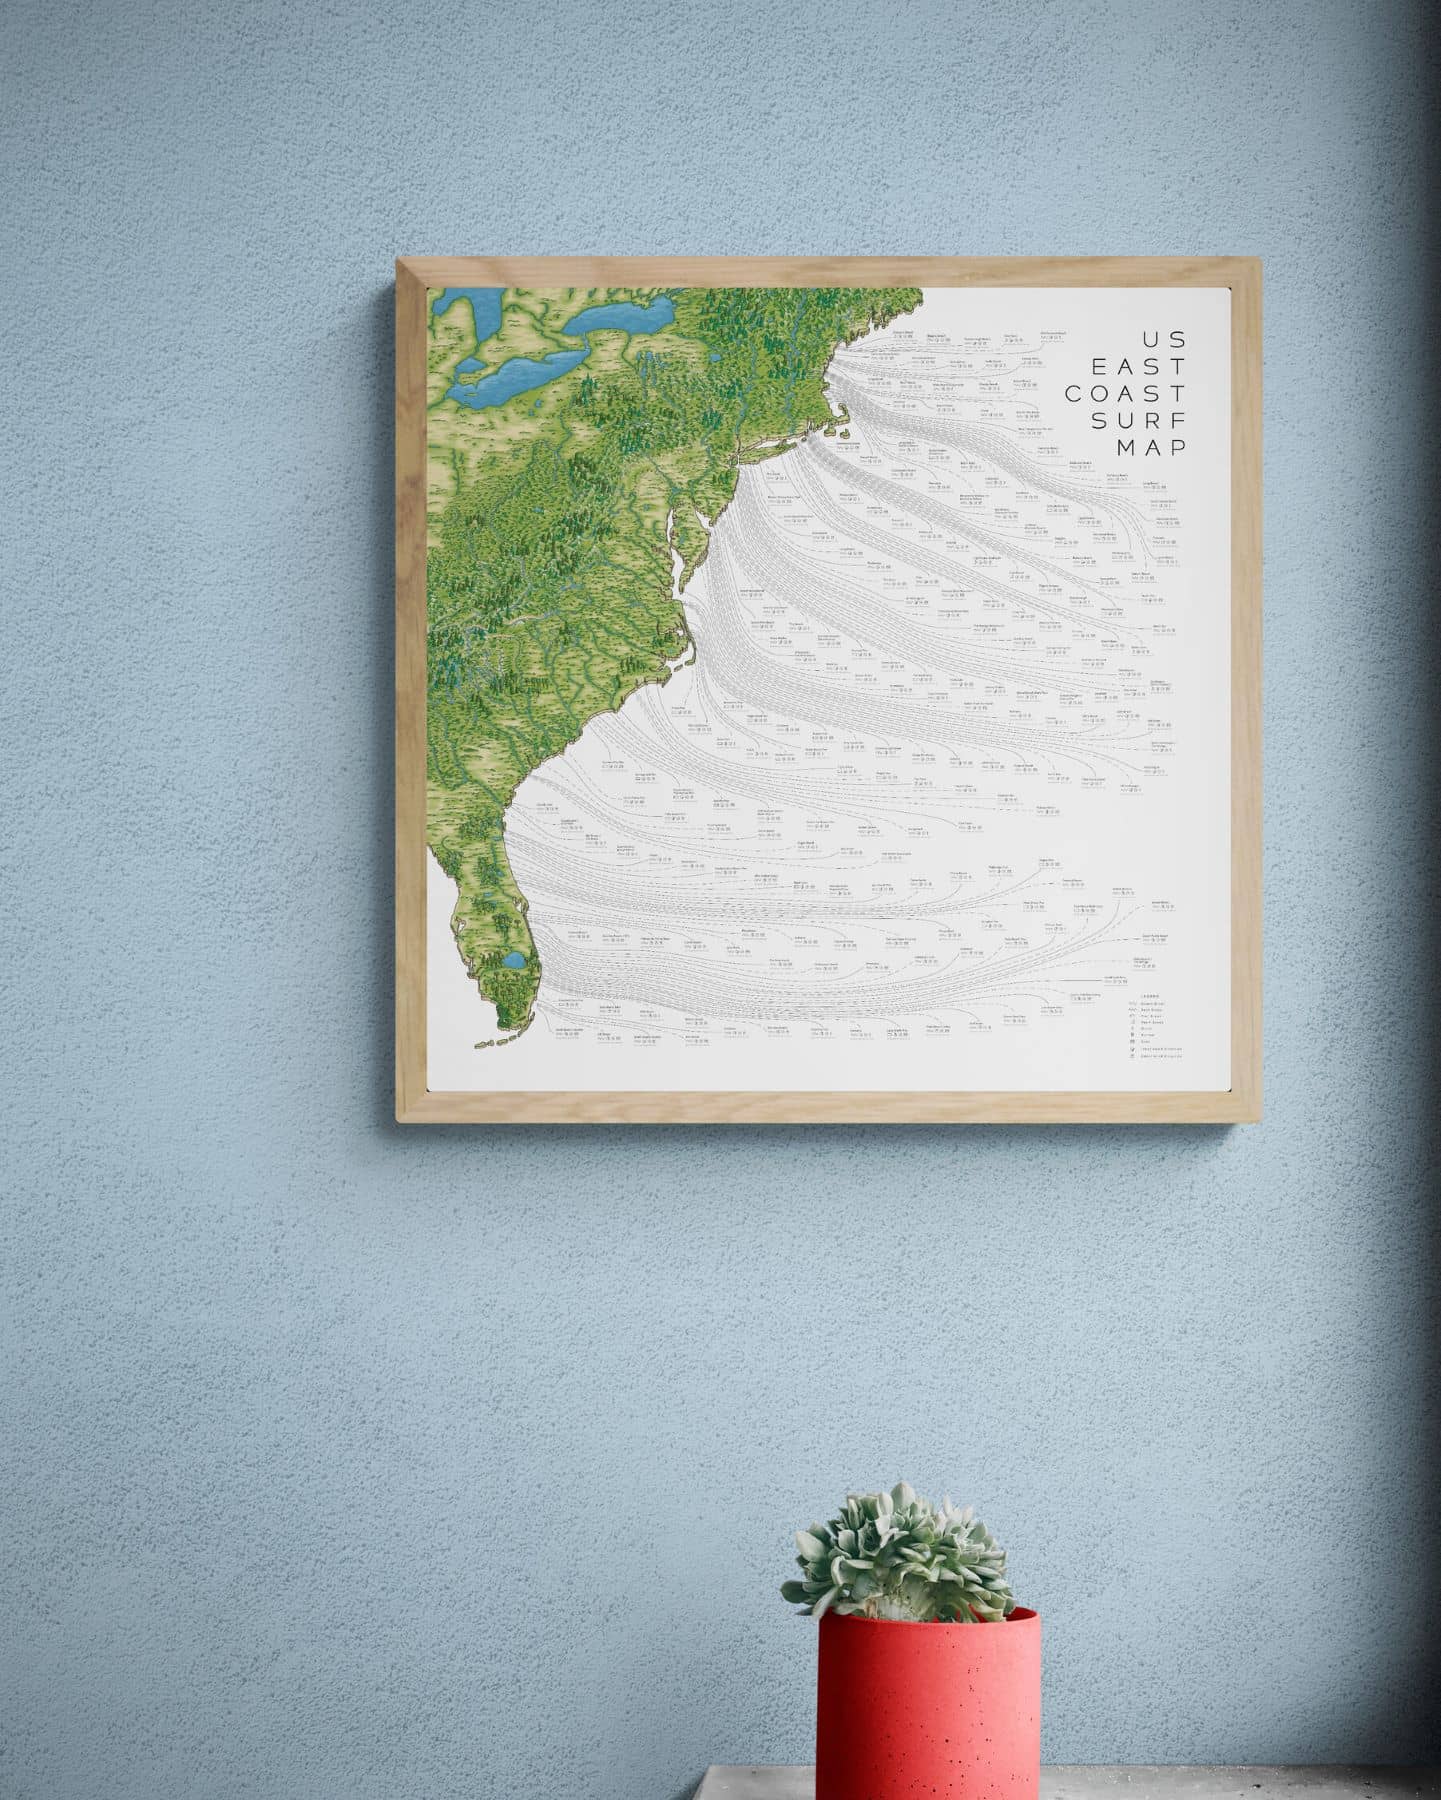 The US East Coast Surf Map